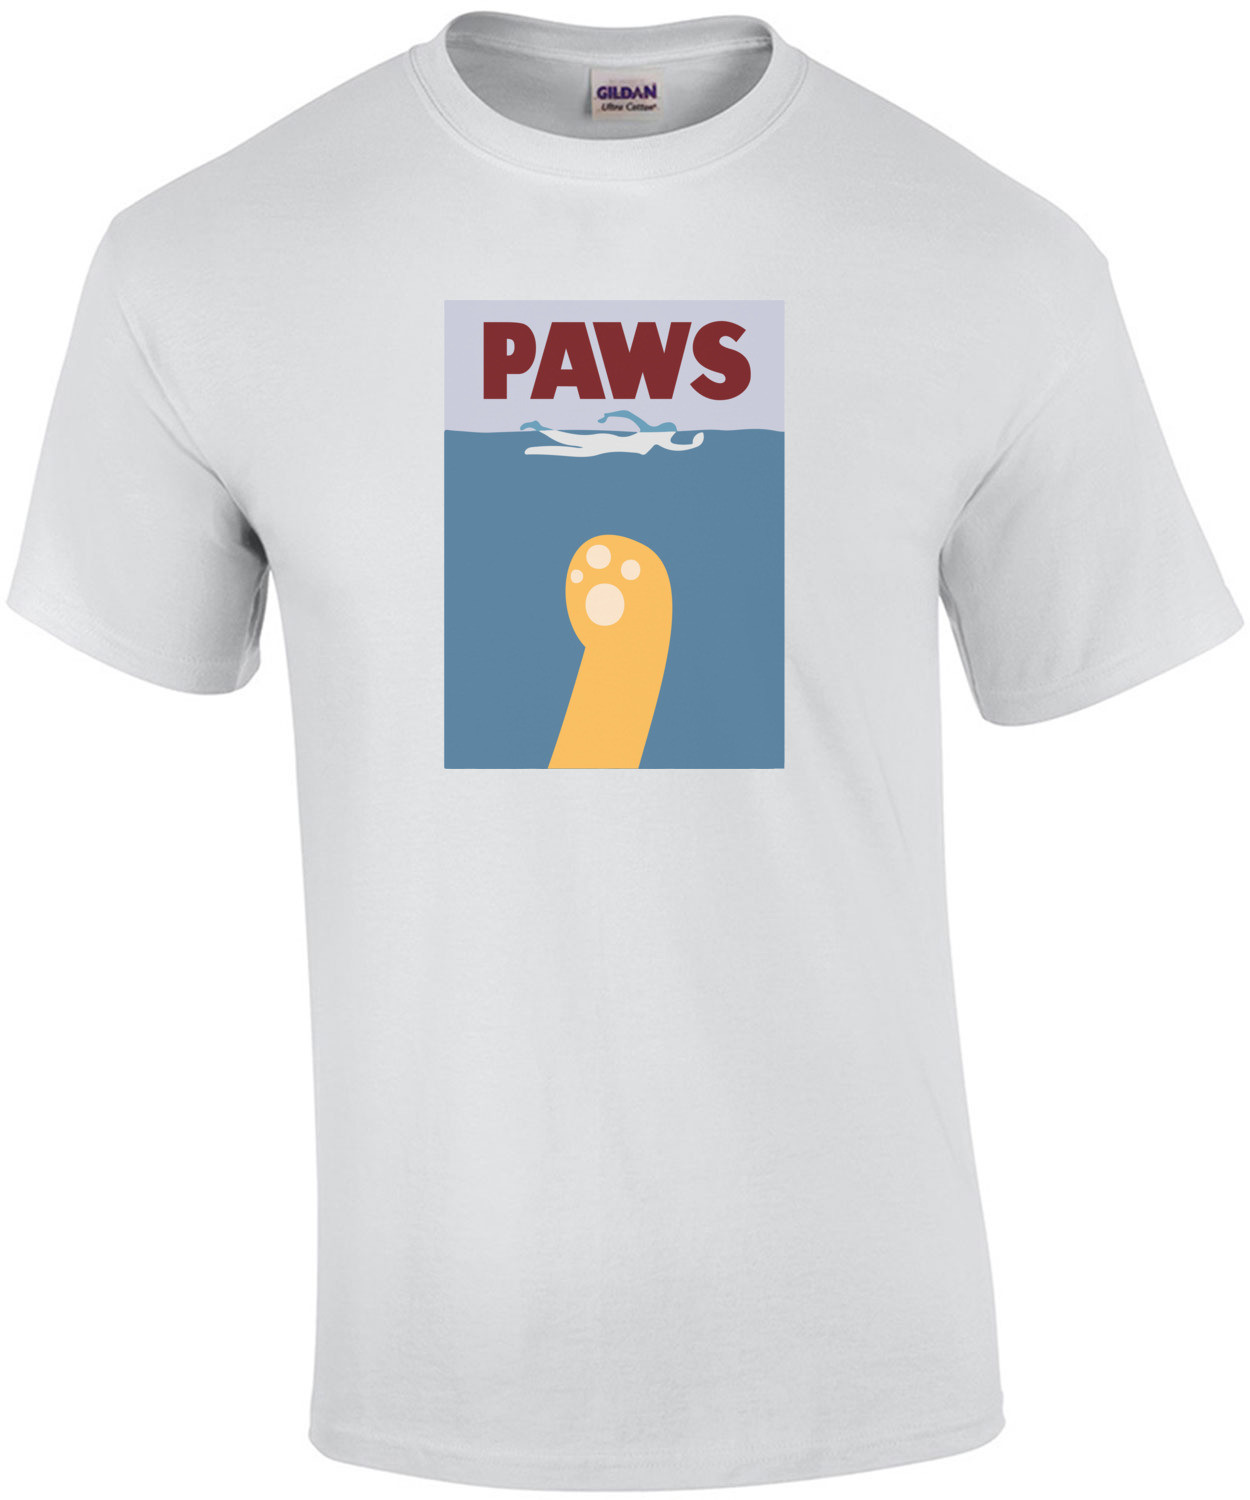 Paws T-shirt shirt